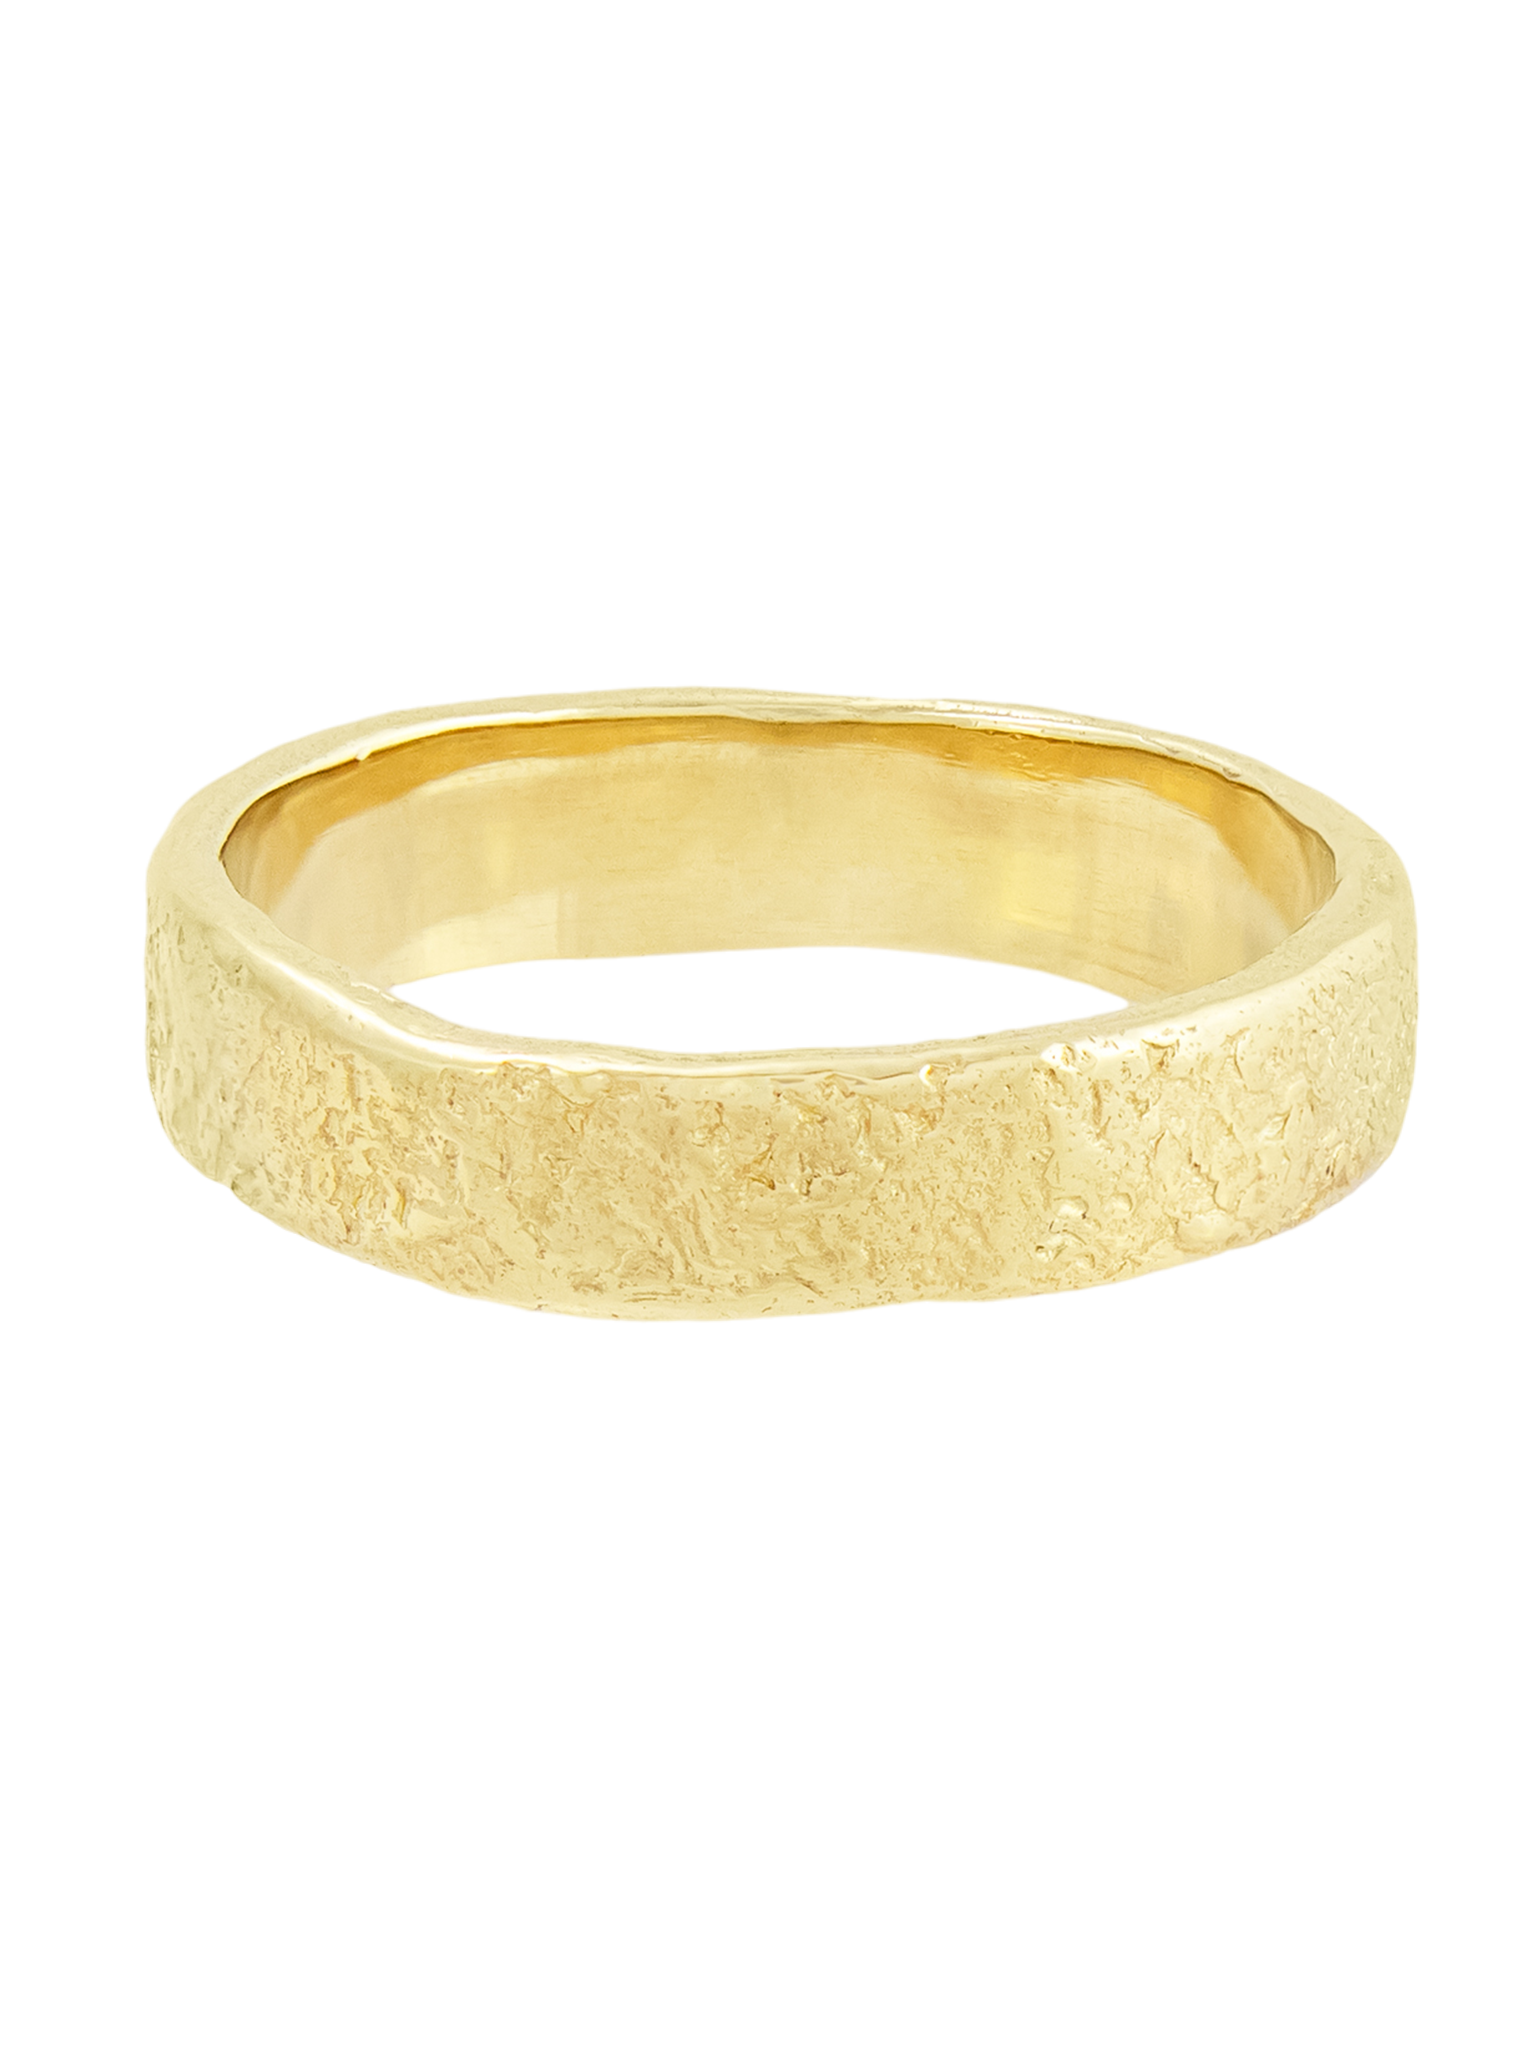 5mm organic textured wedding ring